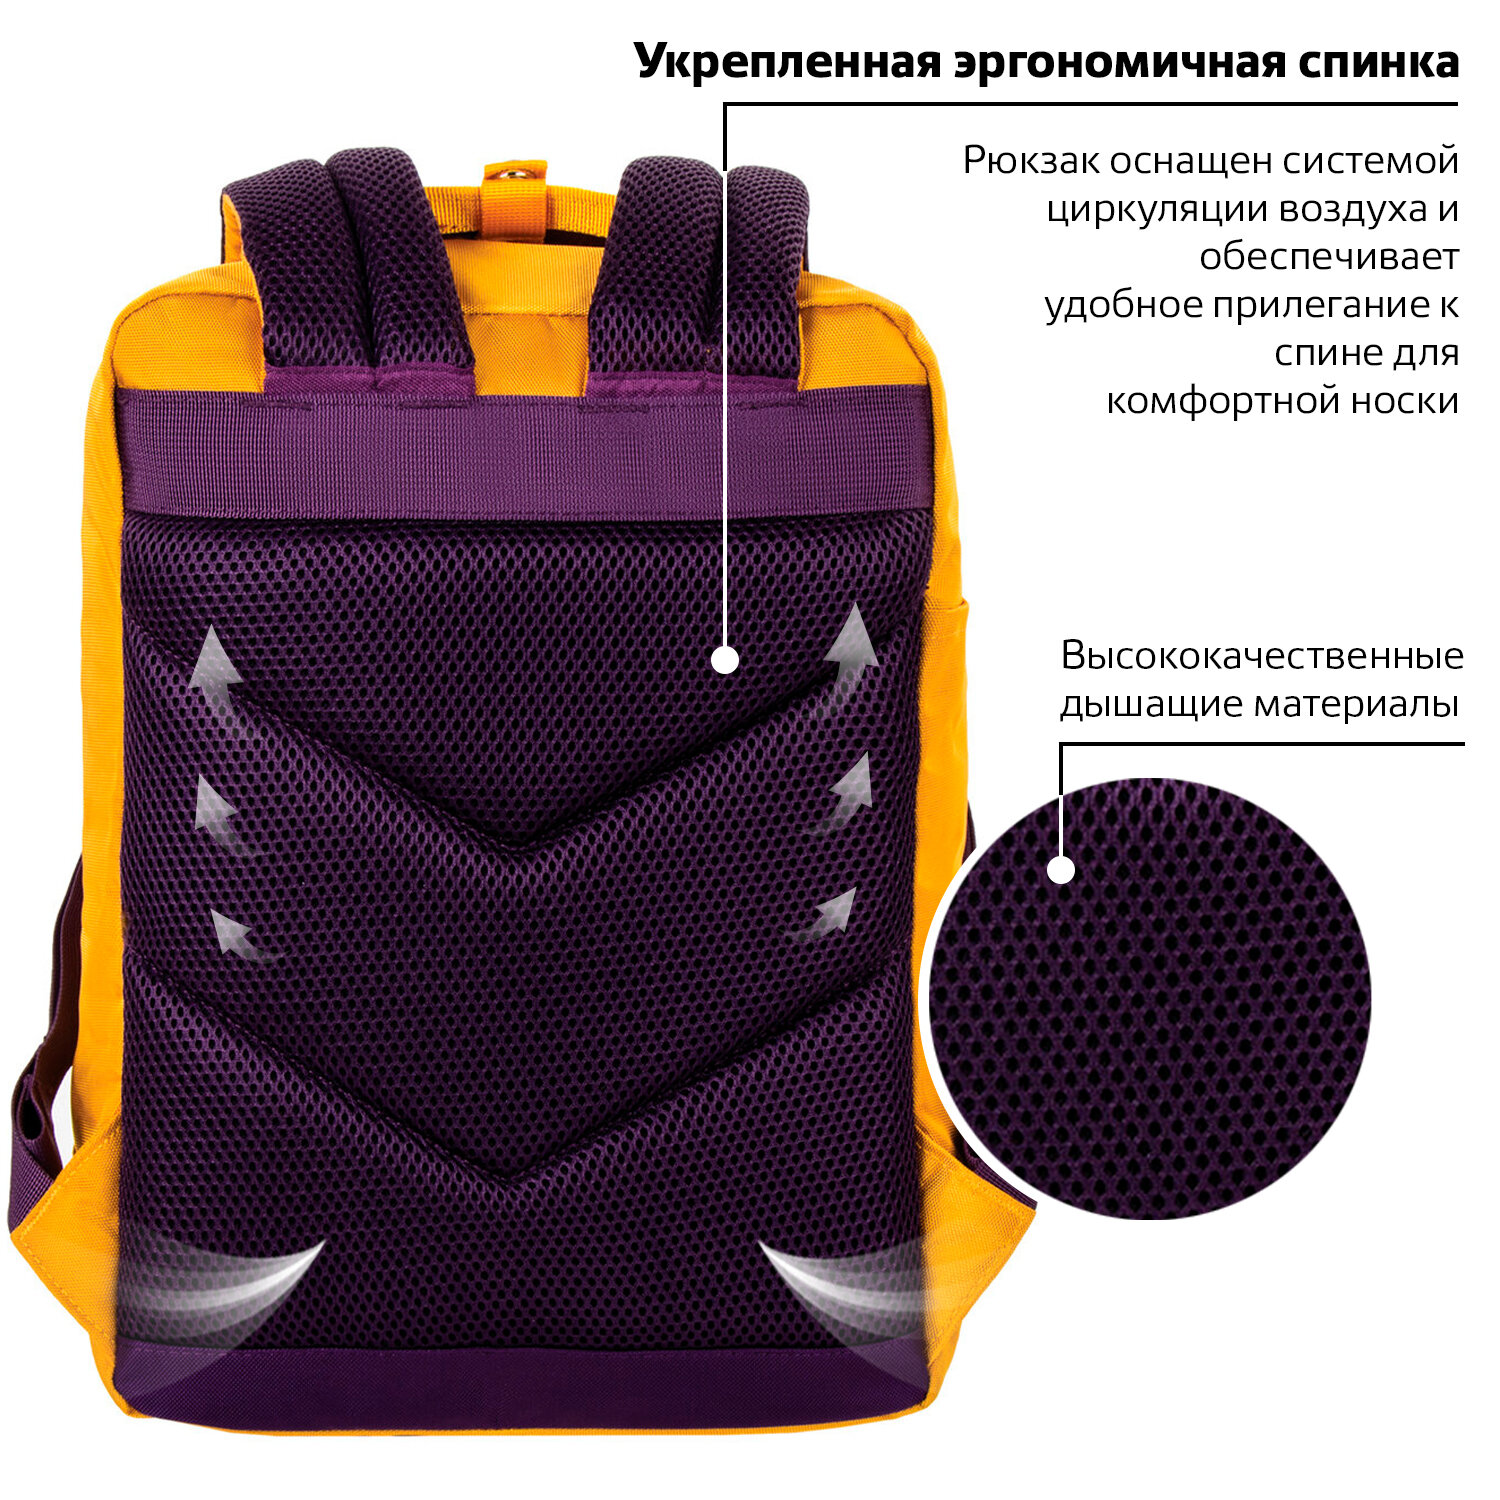 Рюкзак BRAUBERG FRIENDLY молодежный, горчично-фиолетовый, 37х26х13 см, 270093